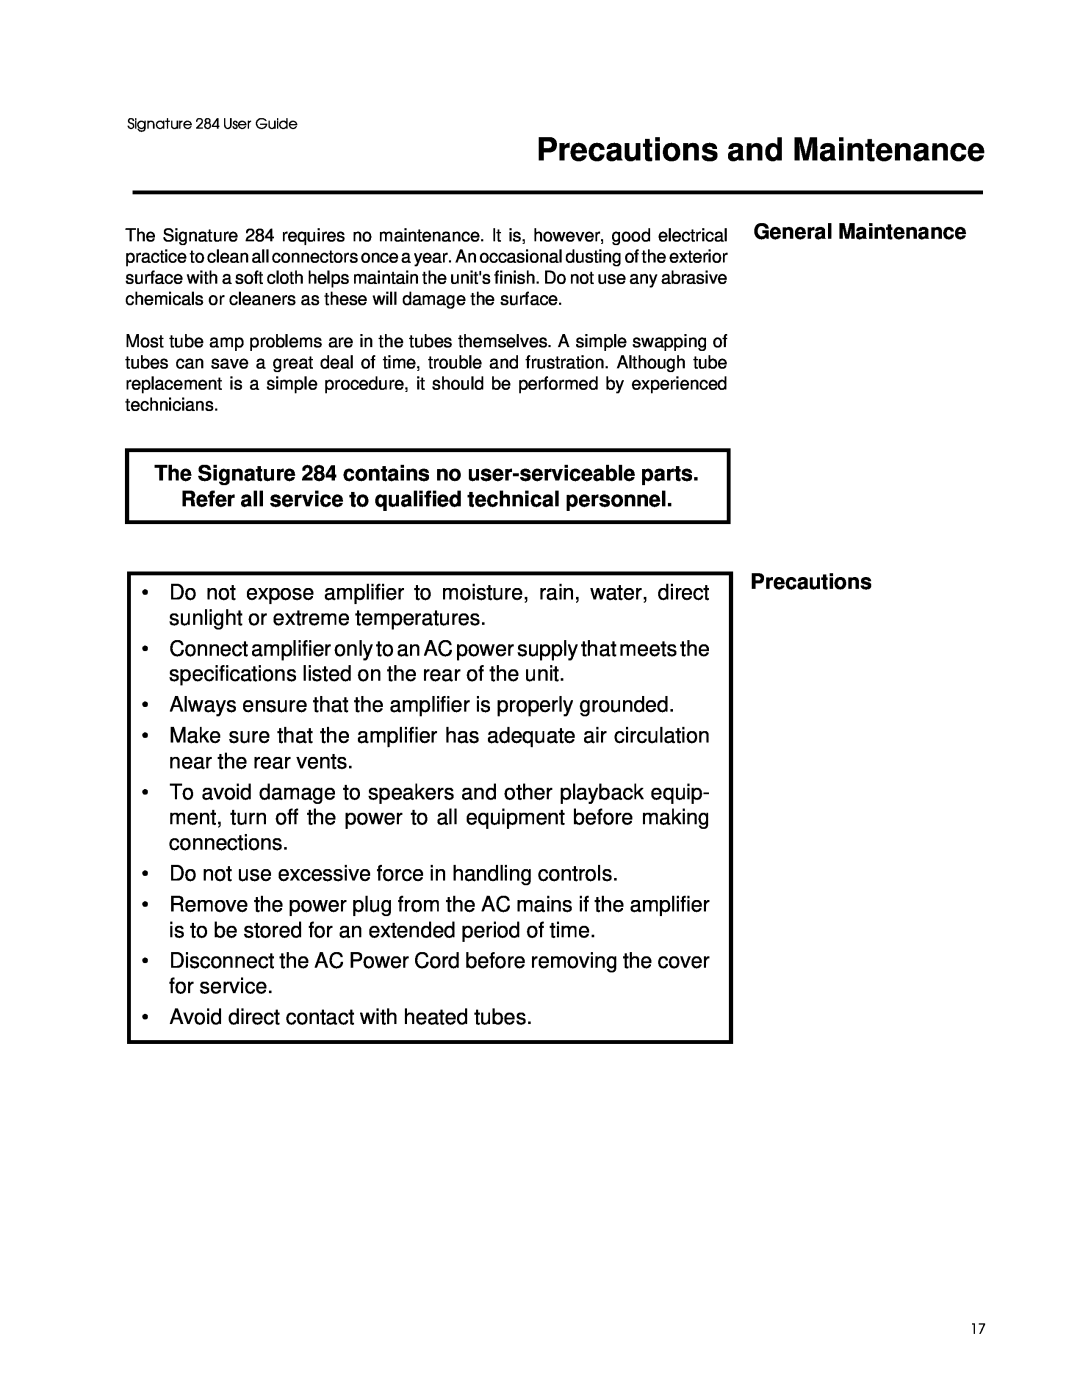 Lexicon 284 manual Precautions and Maintenance 